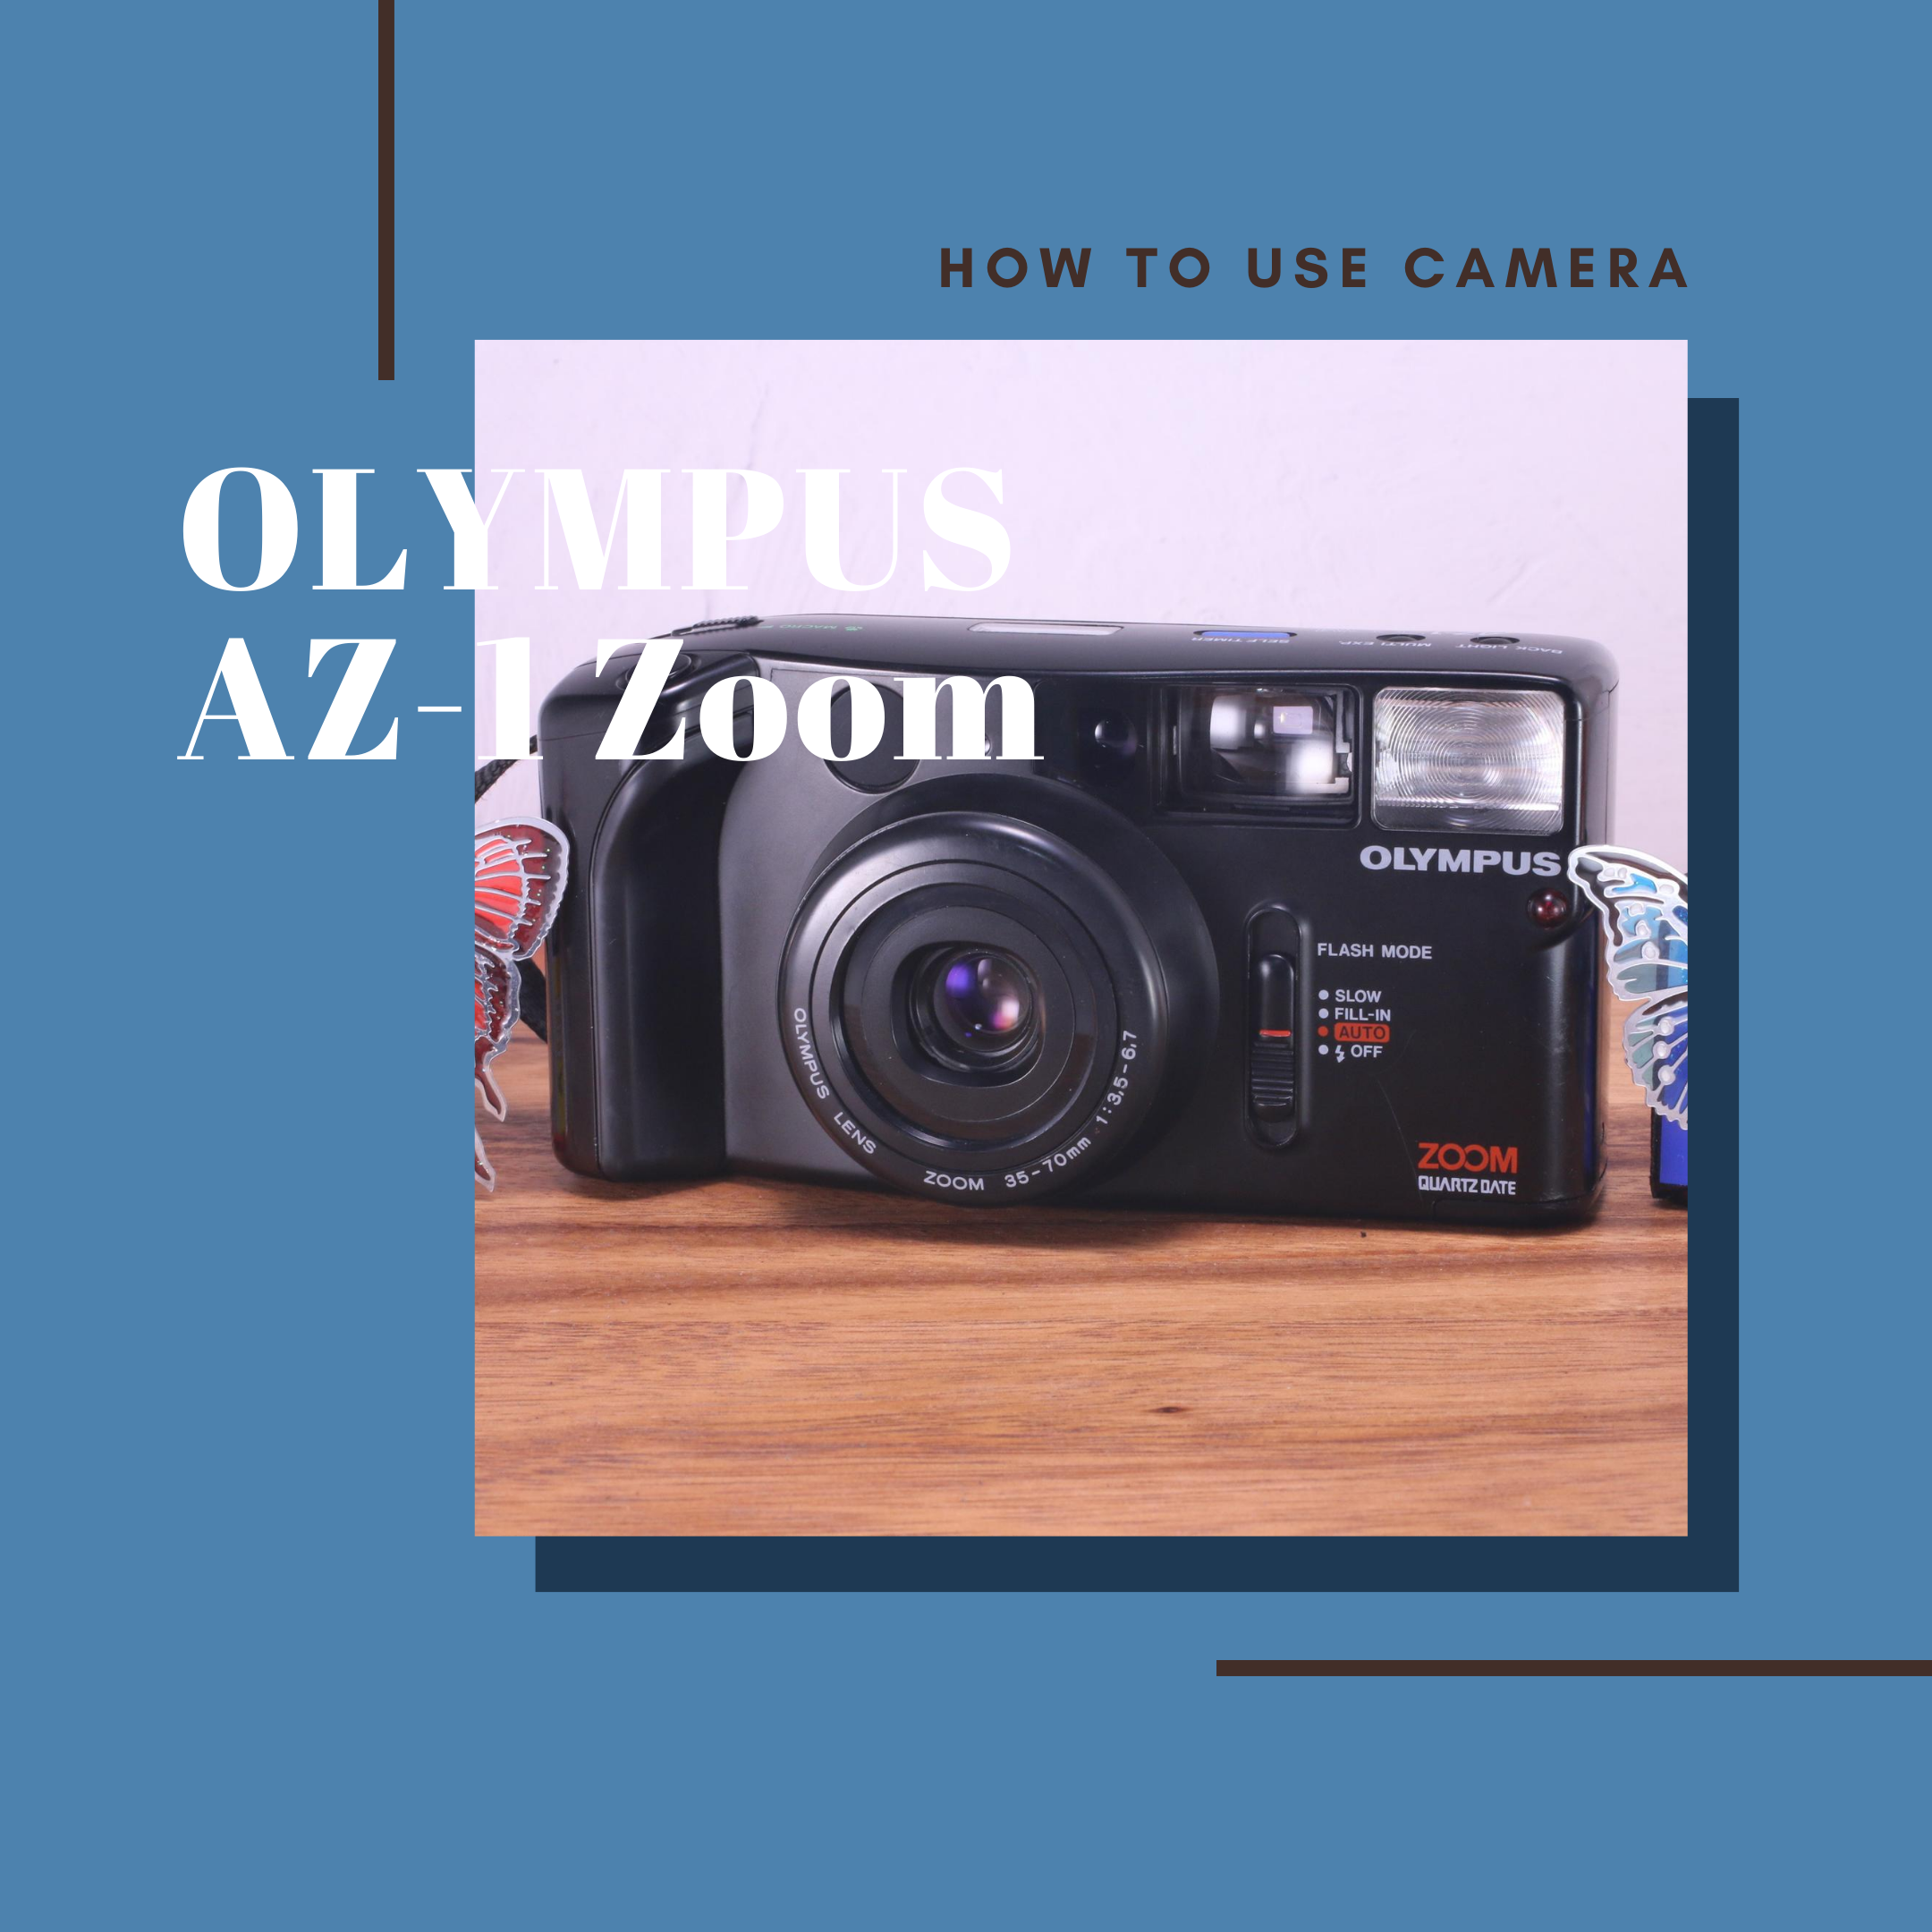 OLYMPUS AZ-1 Zoomの使い方 | Totte Me Camera